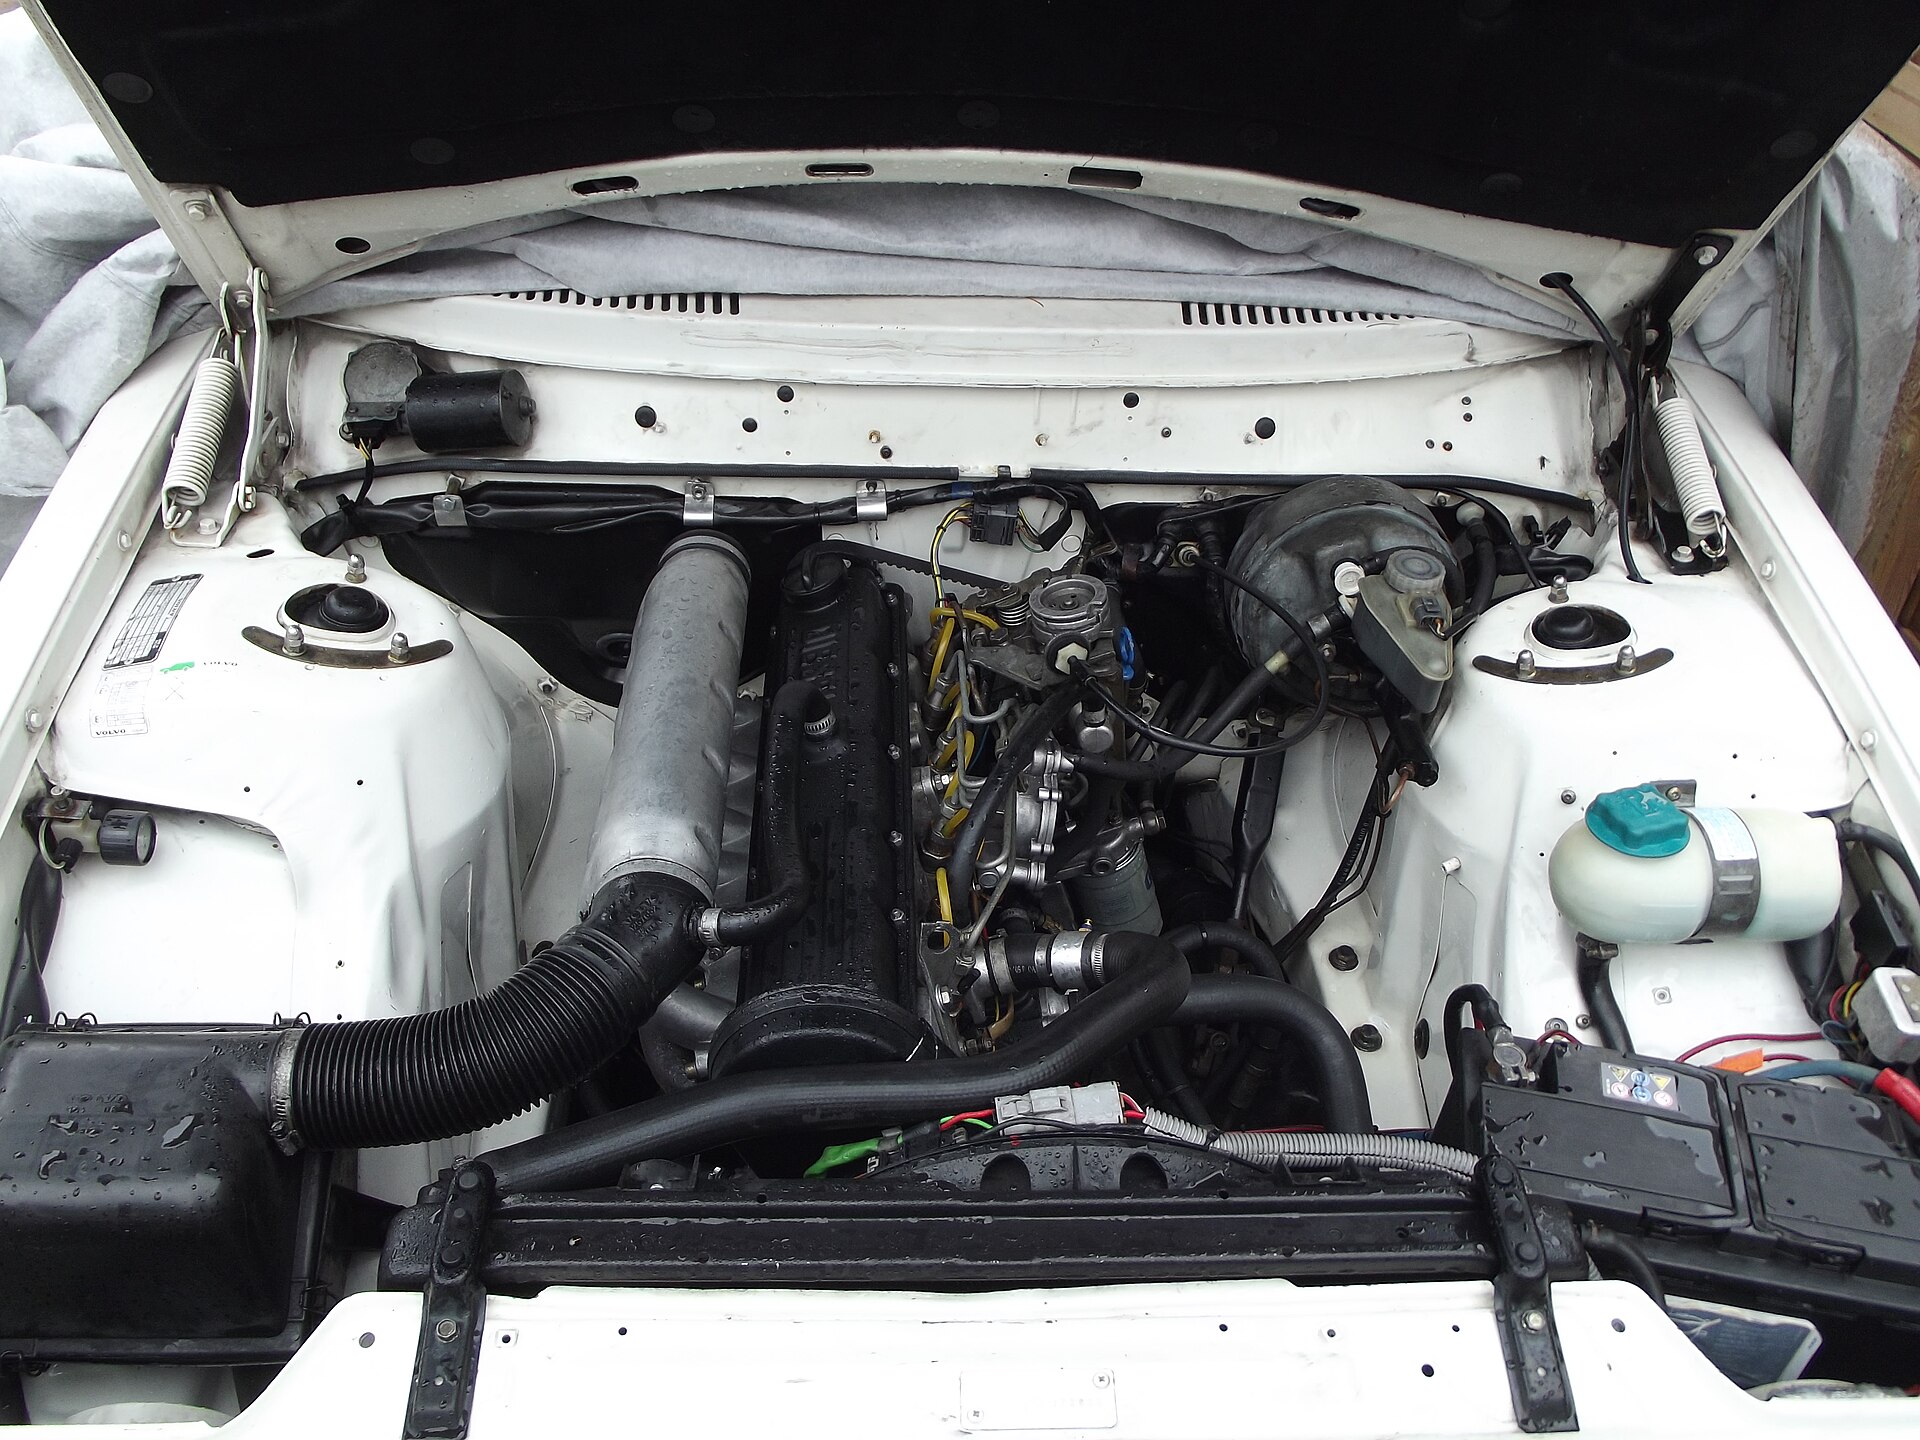 Volkswagen D24 engine - Wikipedia fuse box for volvo v70 